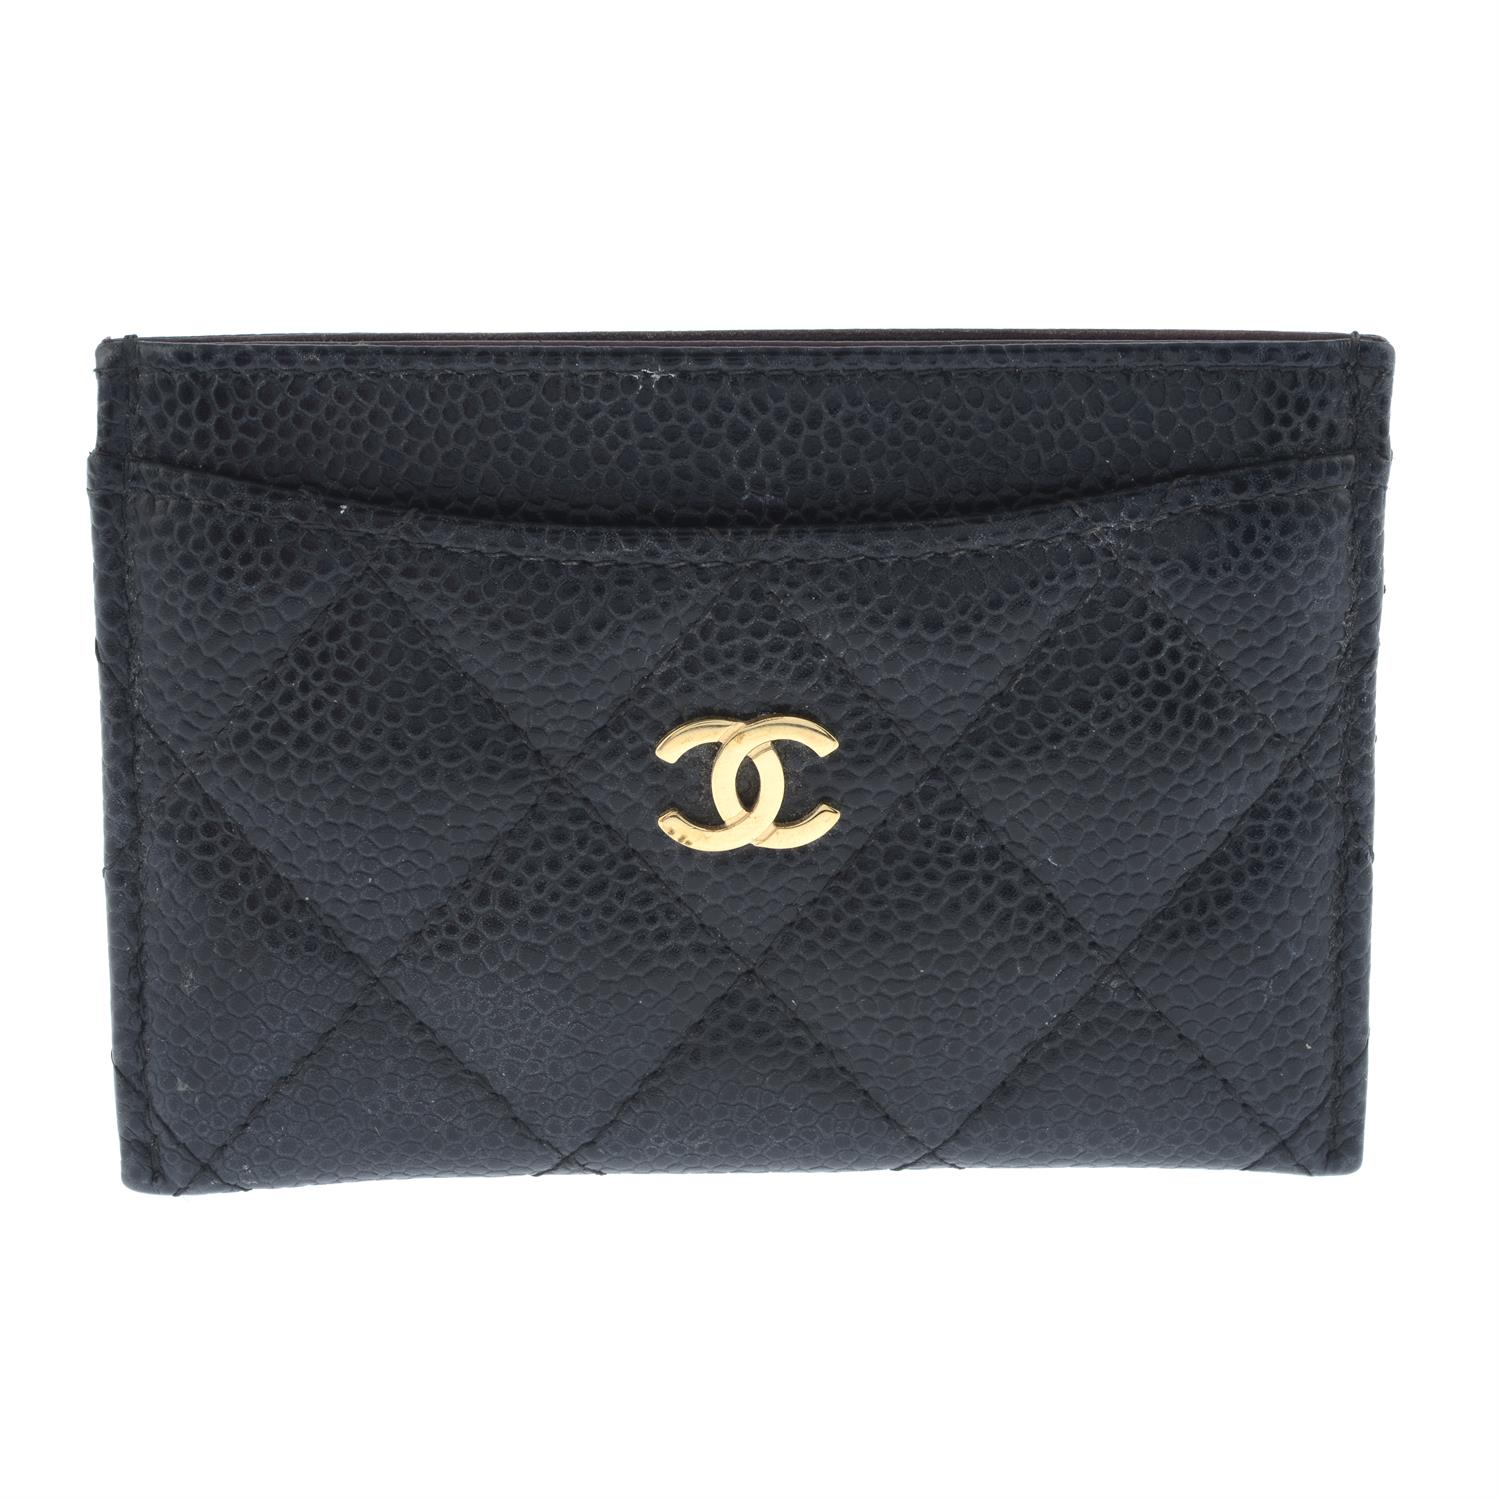 Chanel - CC Caviar card holder.